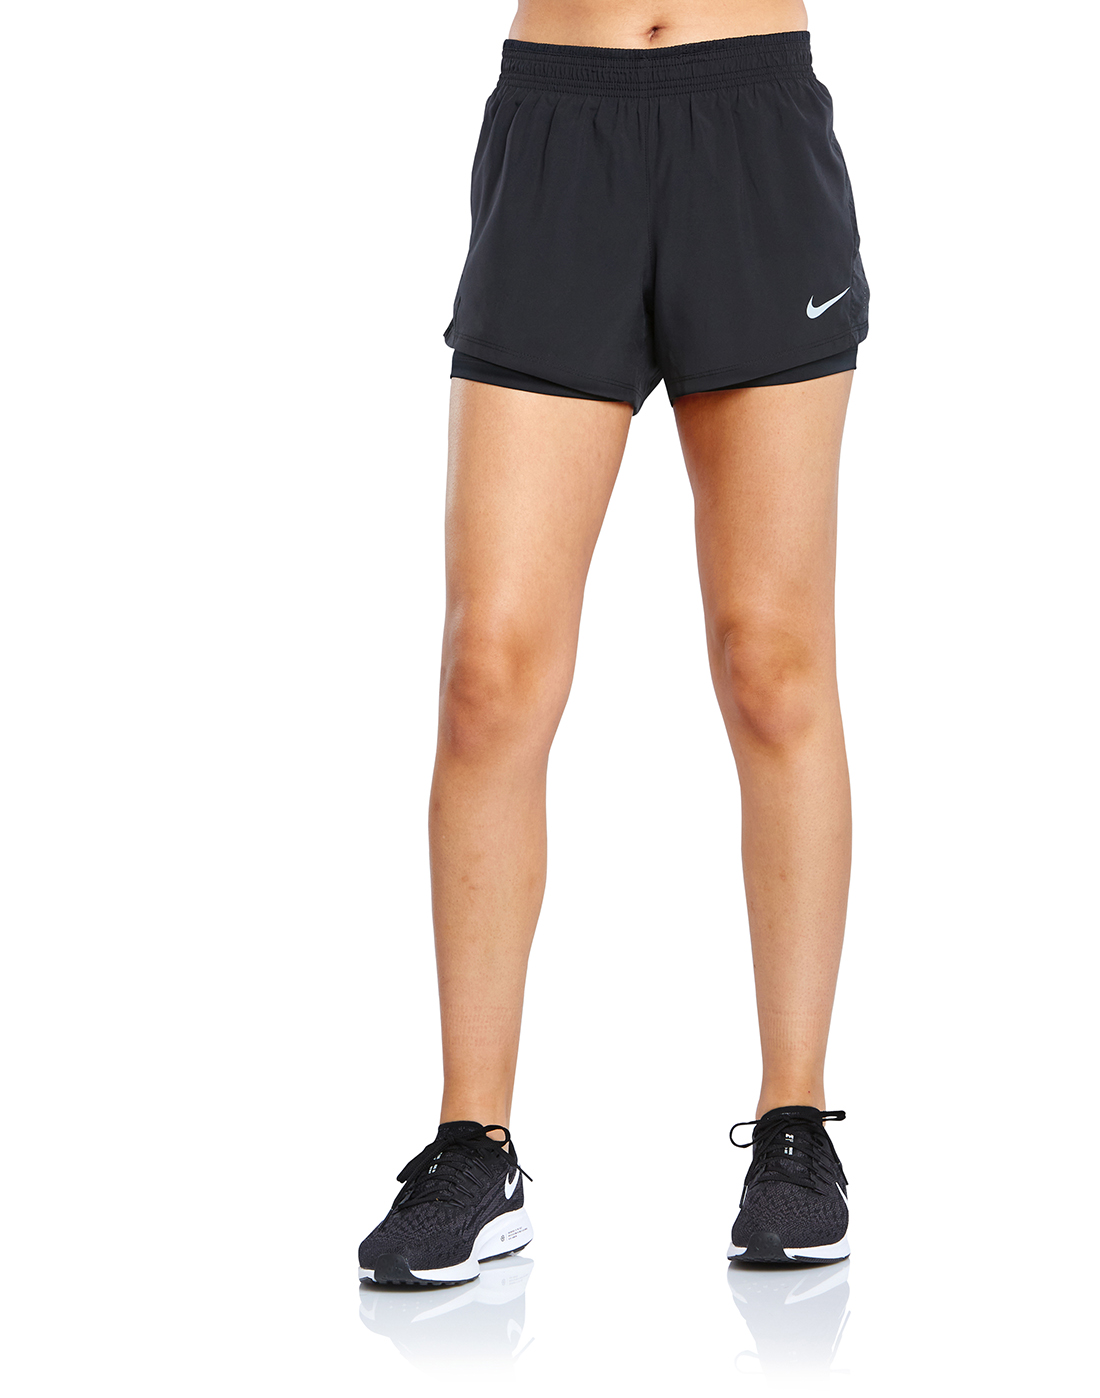 Nike Womens 10k 2-in-1 Shorts - Black 